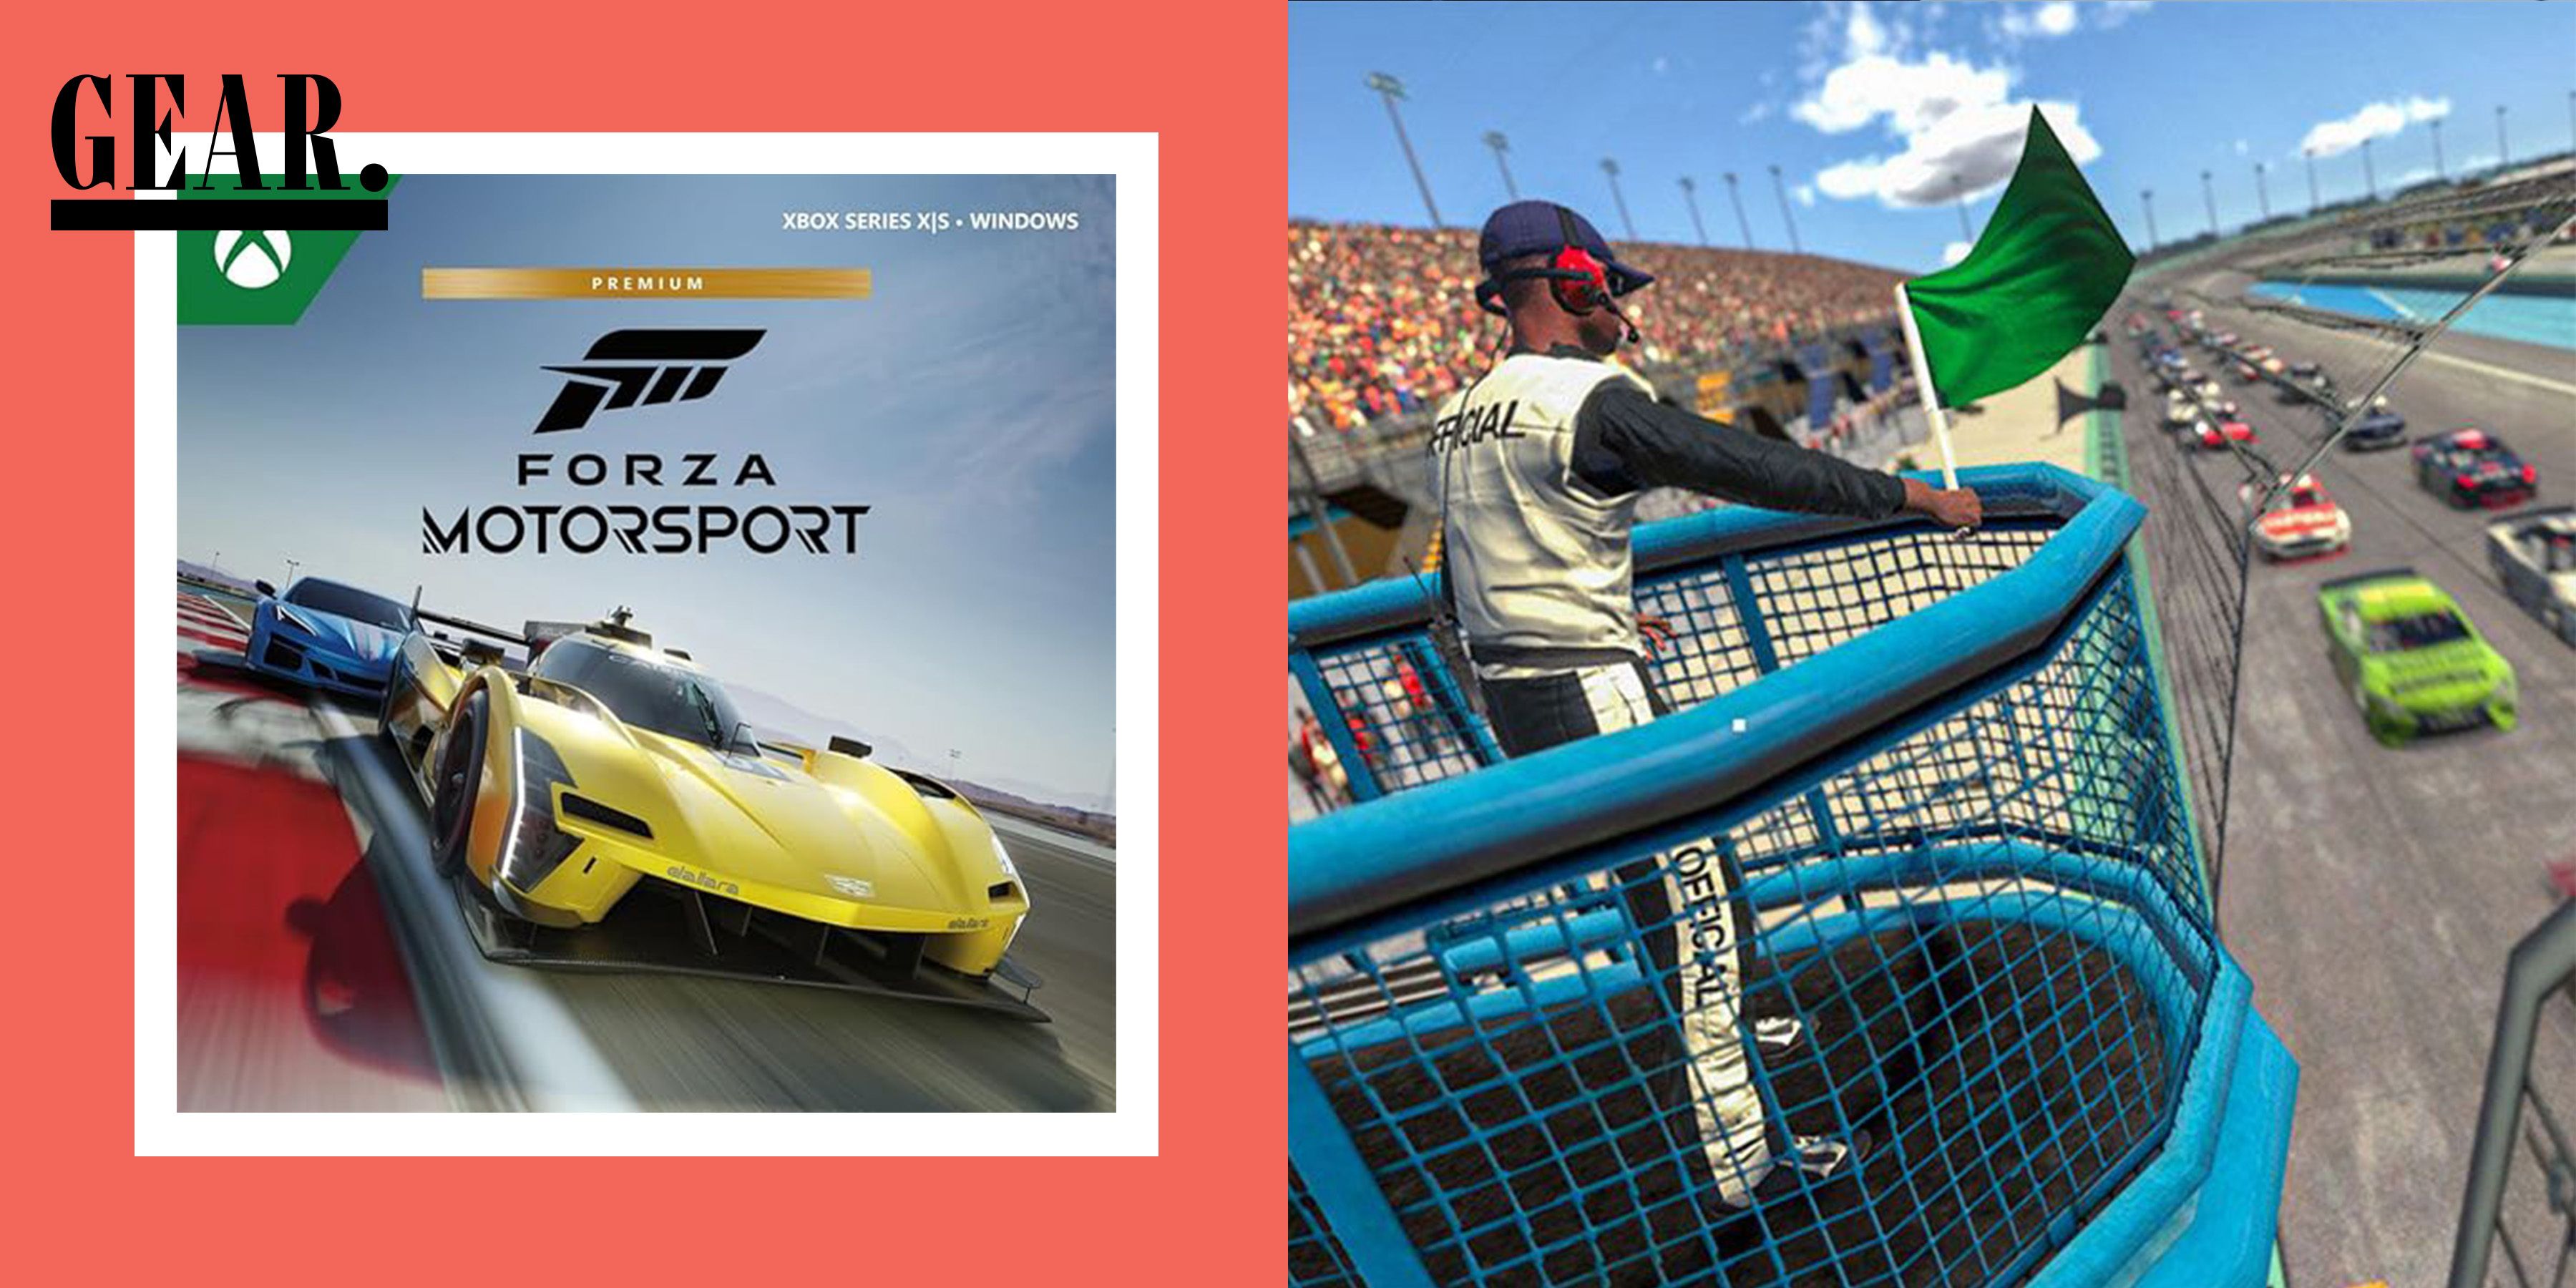 Forza Motorsport 5' thinks beyond shiny cars